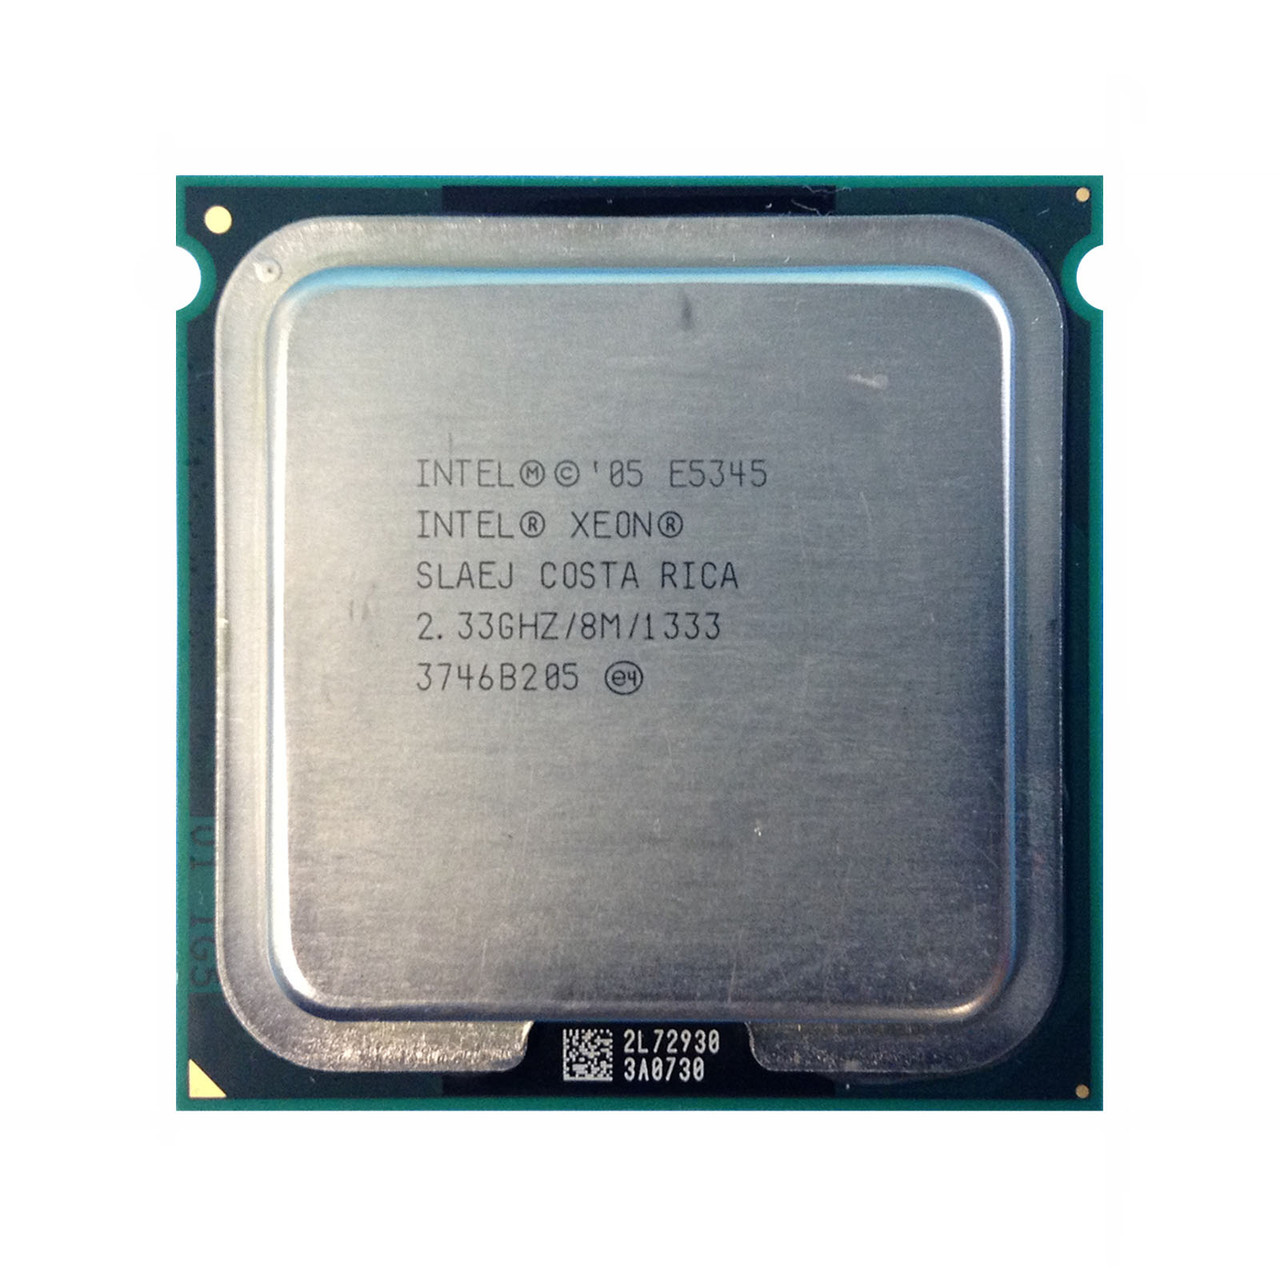 Intel SLAEJ Xeon E5345 QC 2.33Ghz 8MB 1333FSB Processor